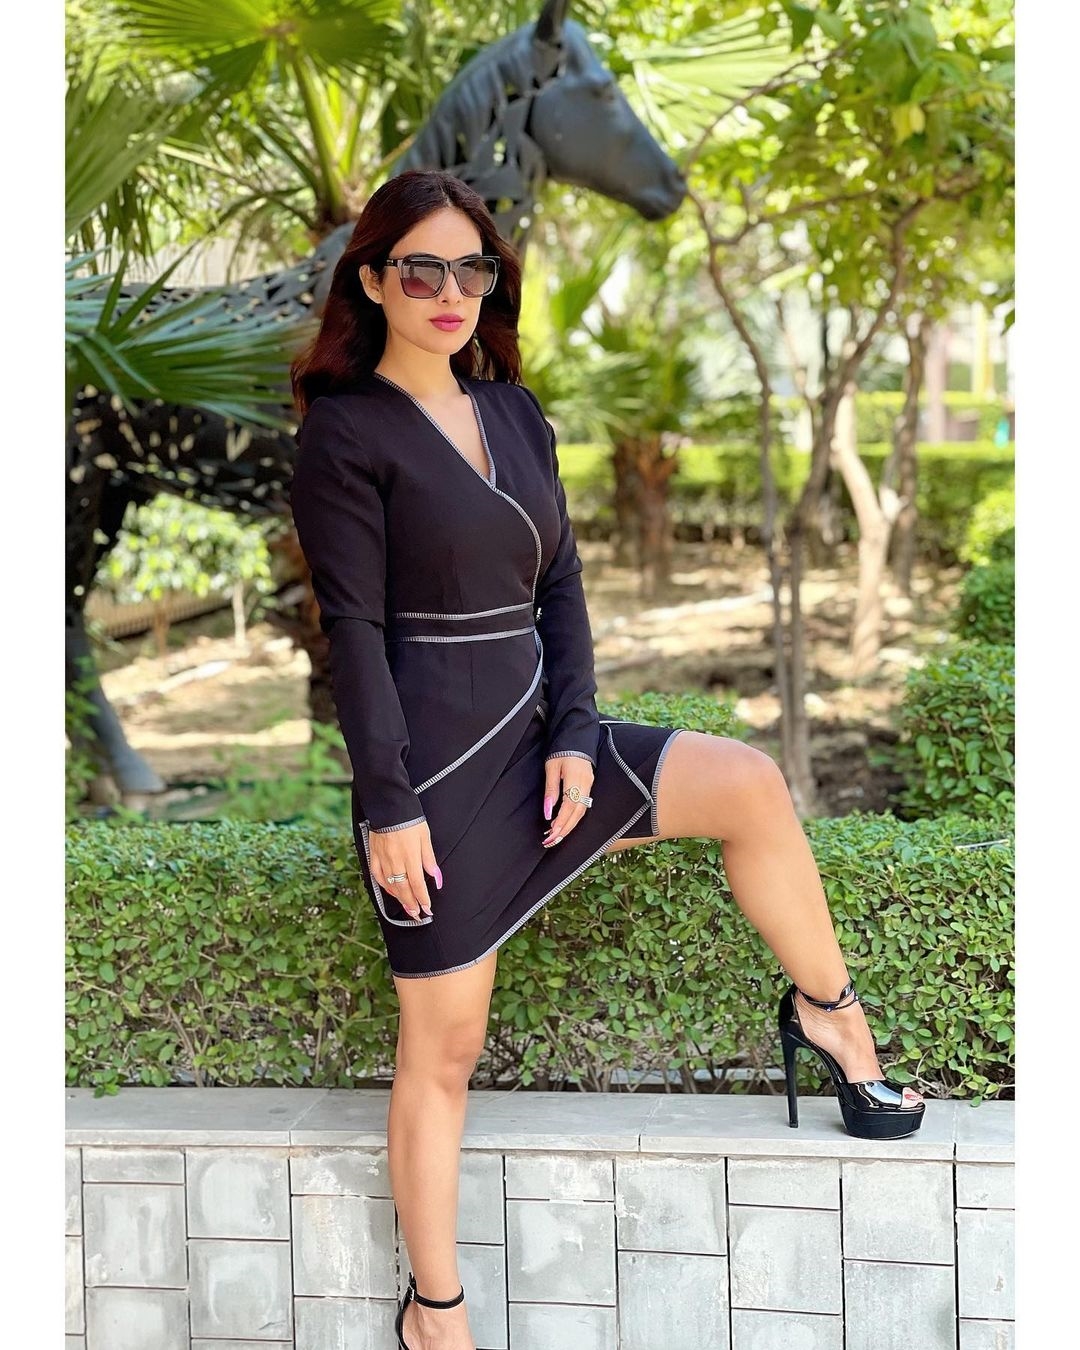 Neha Malik Hot Photos Gallery In Black Dress